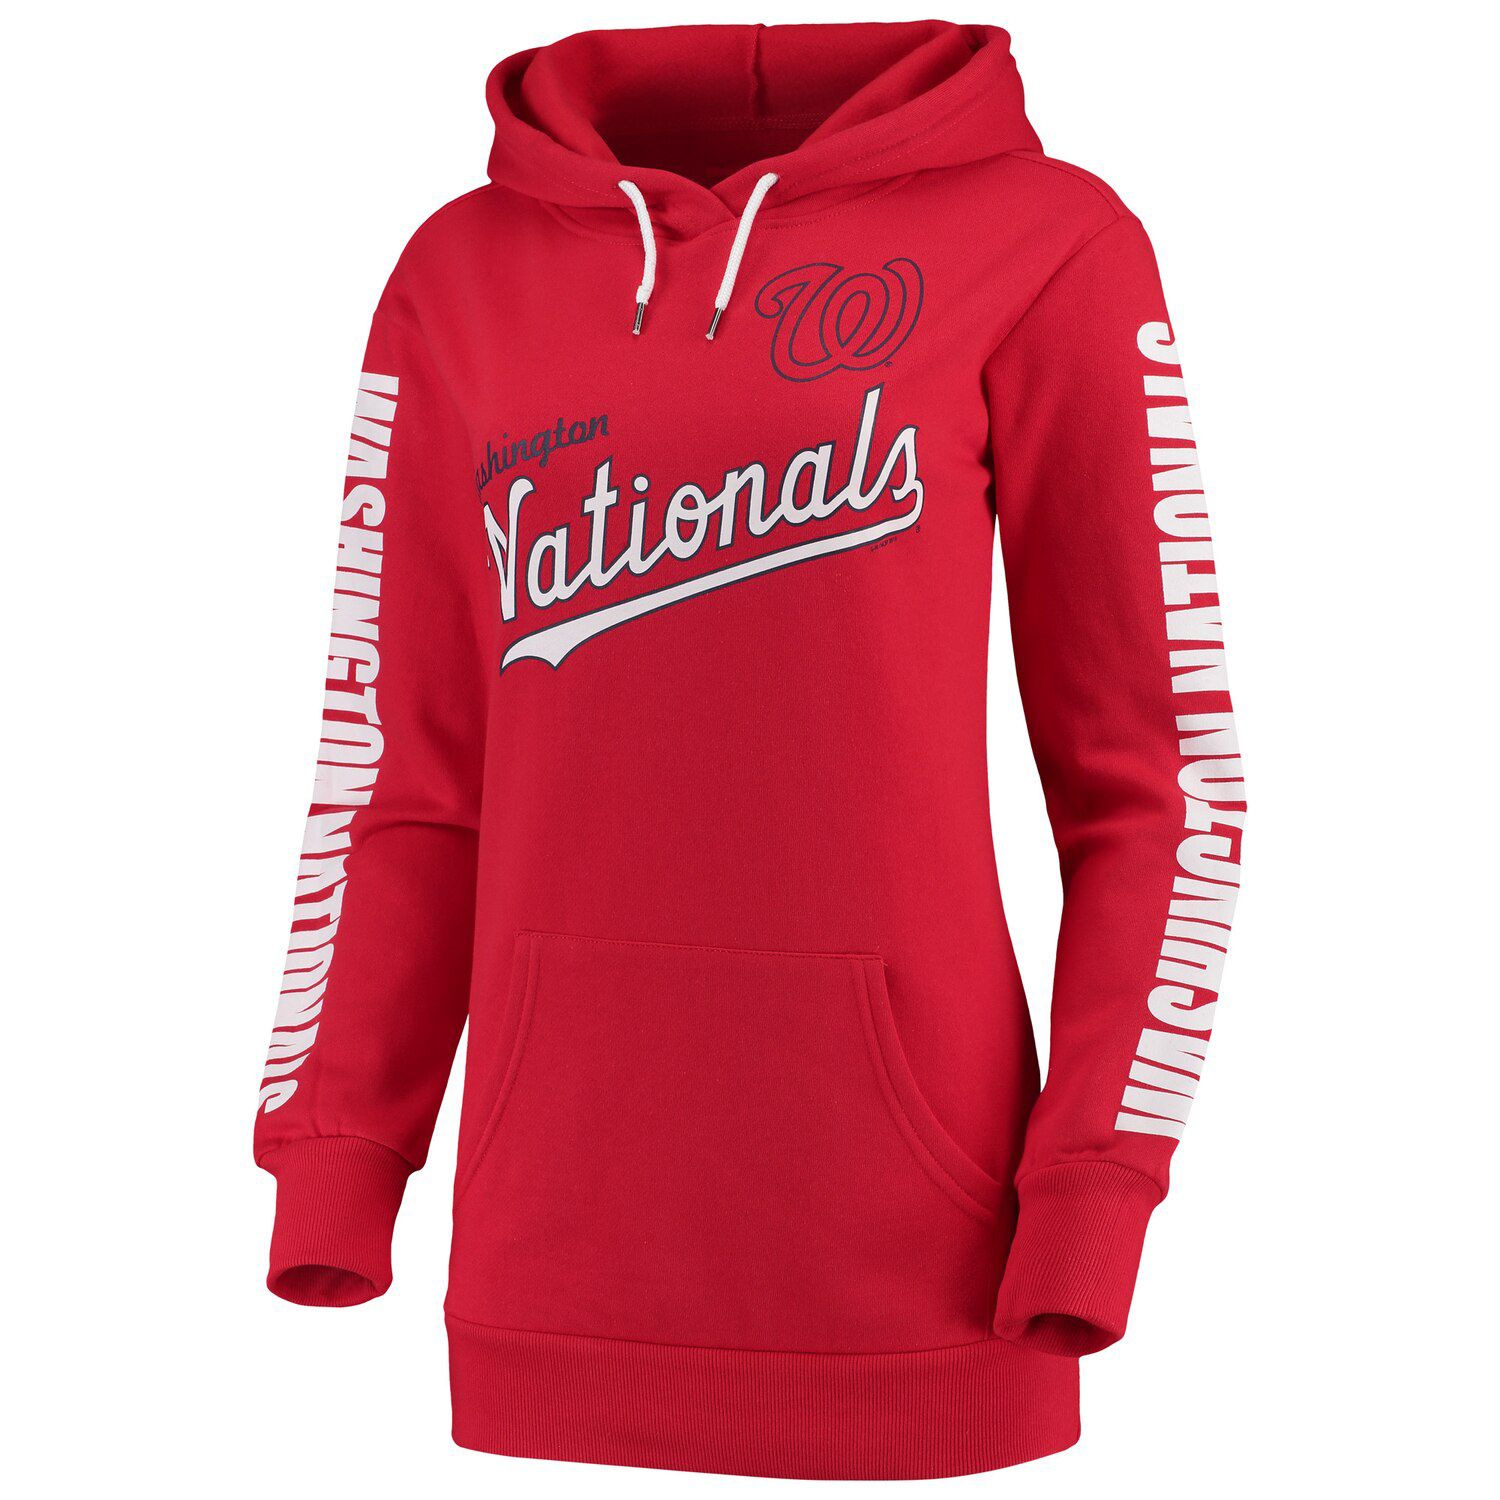 washington nationals women's sweatshirt